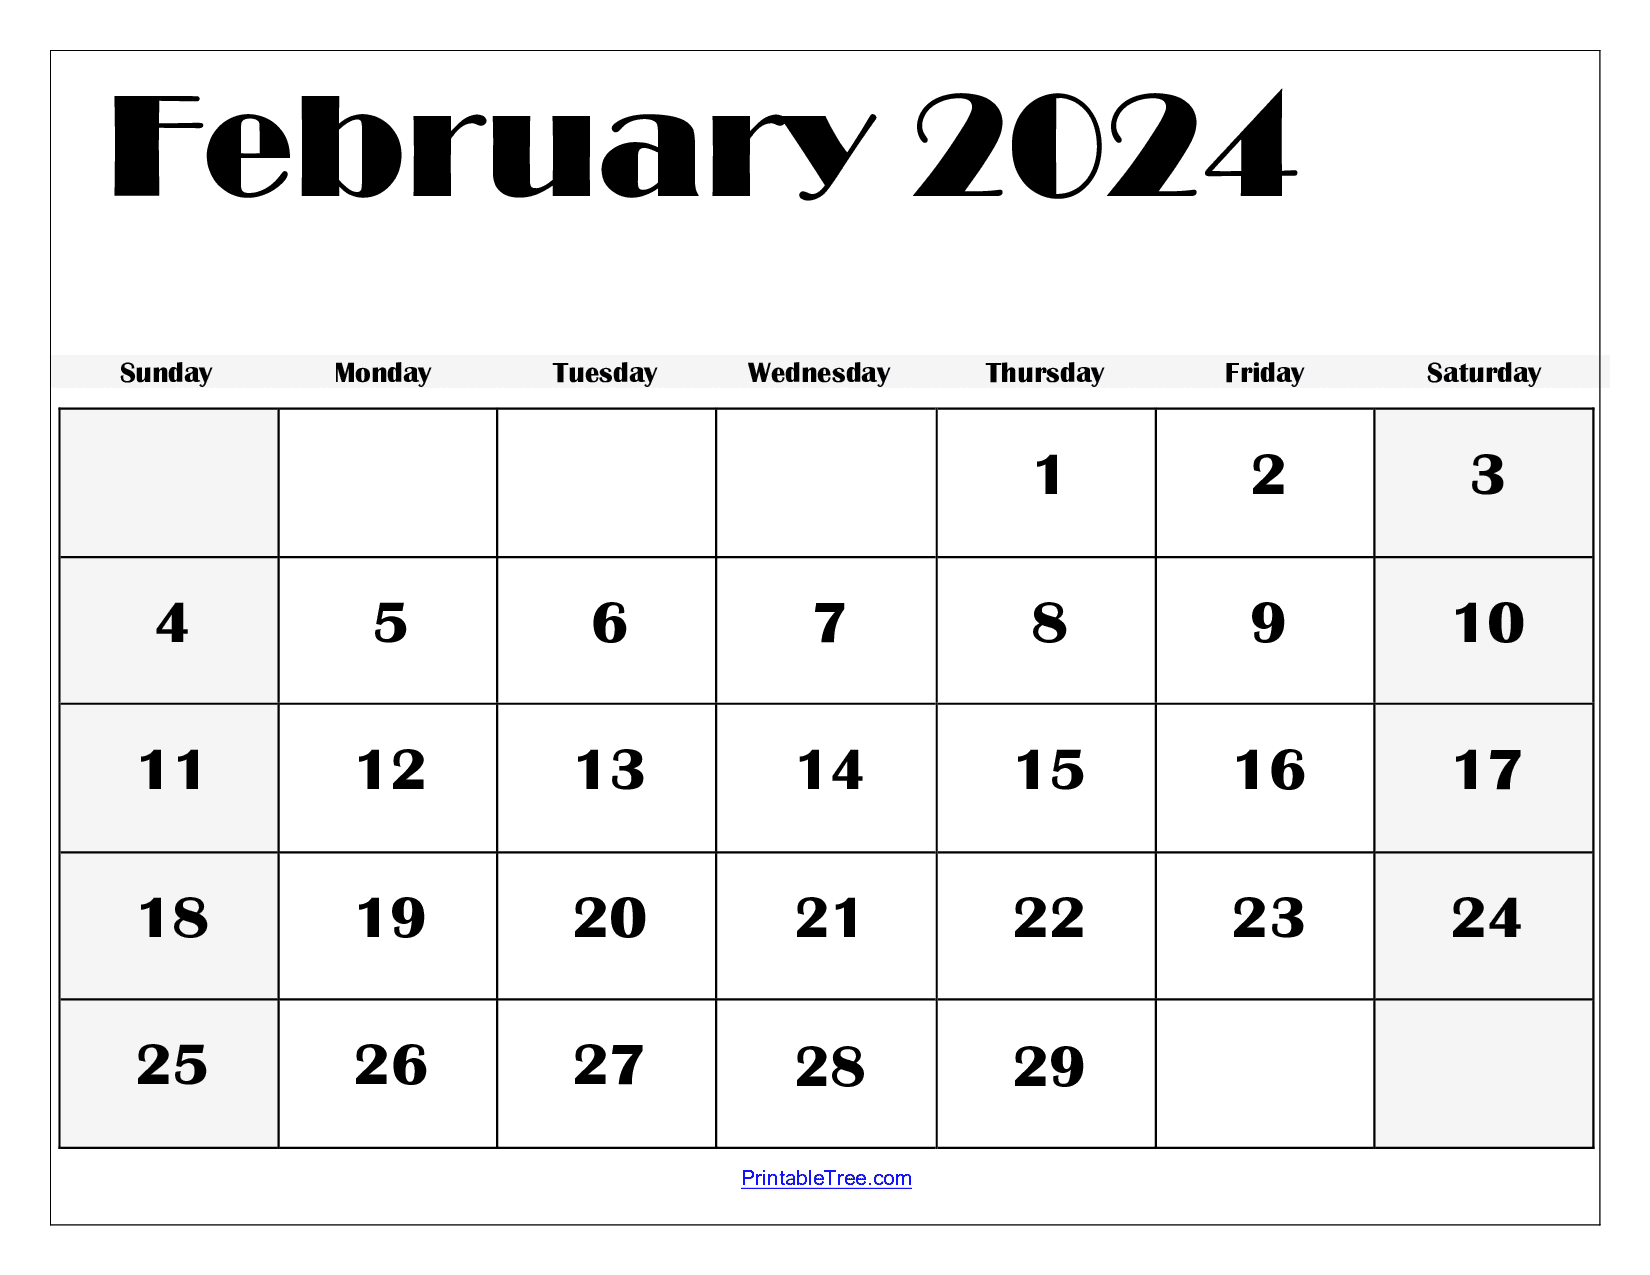 February 2024 Calendar Printable Pdf Template With Holidays for Free Printable Calendar For February 2024